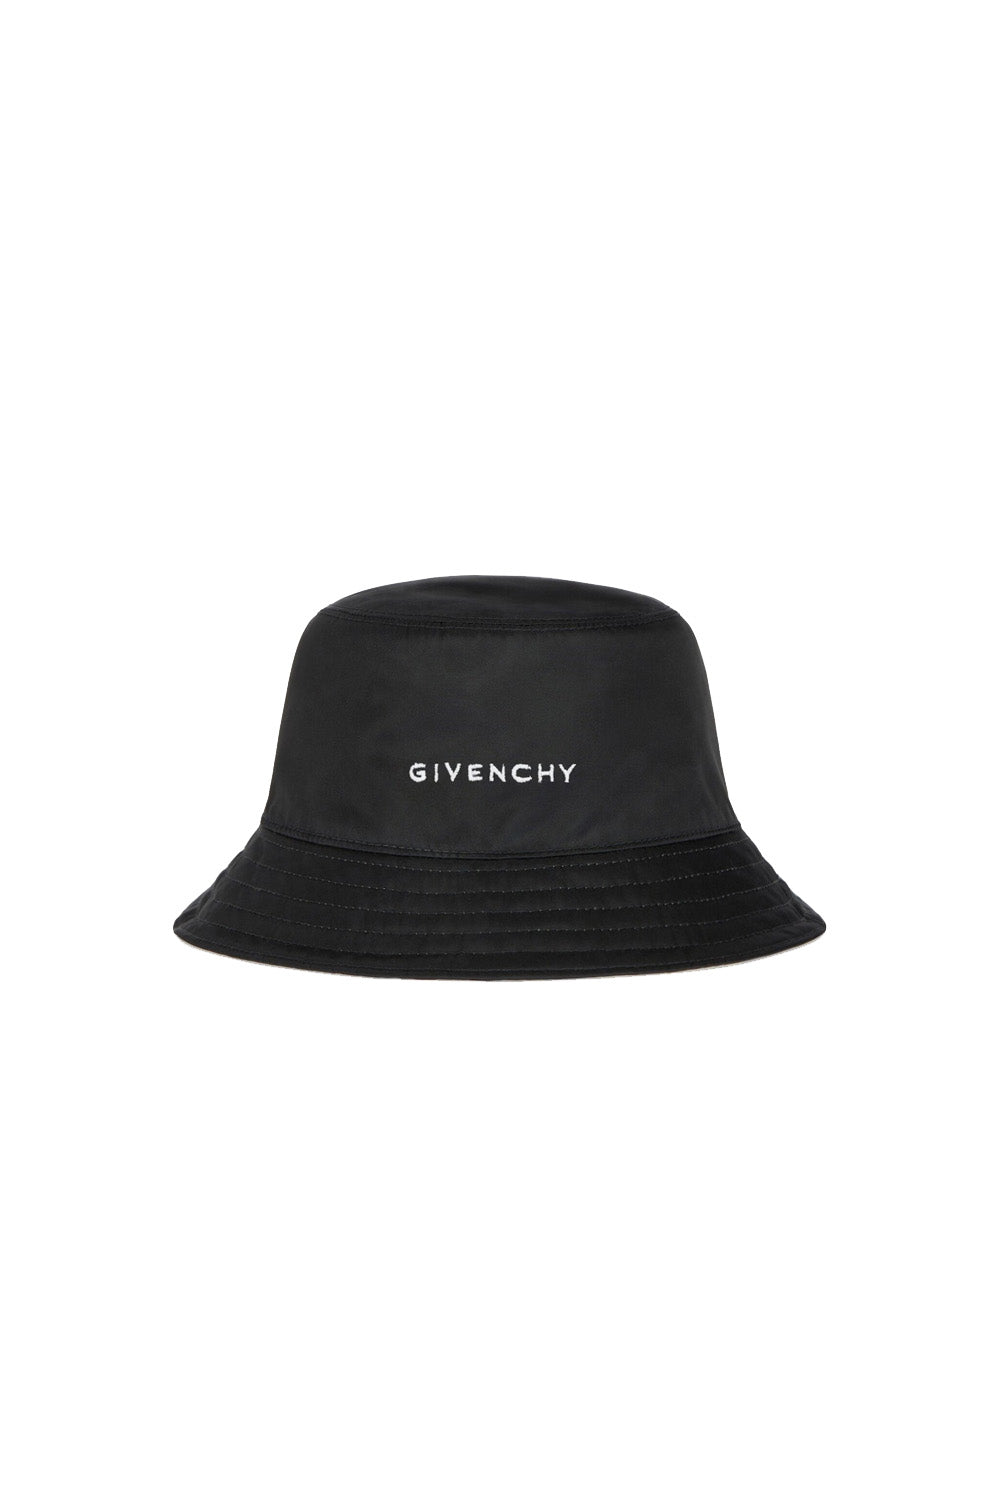 Givenchy bucket hat in nylon